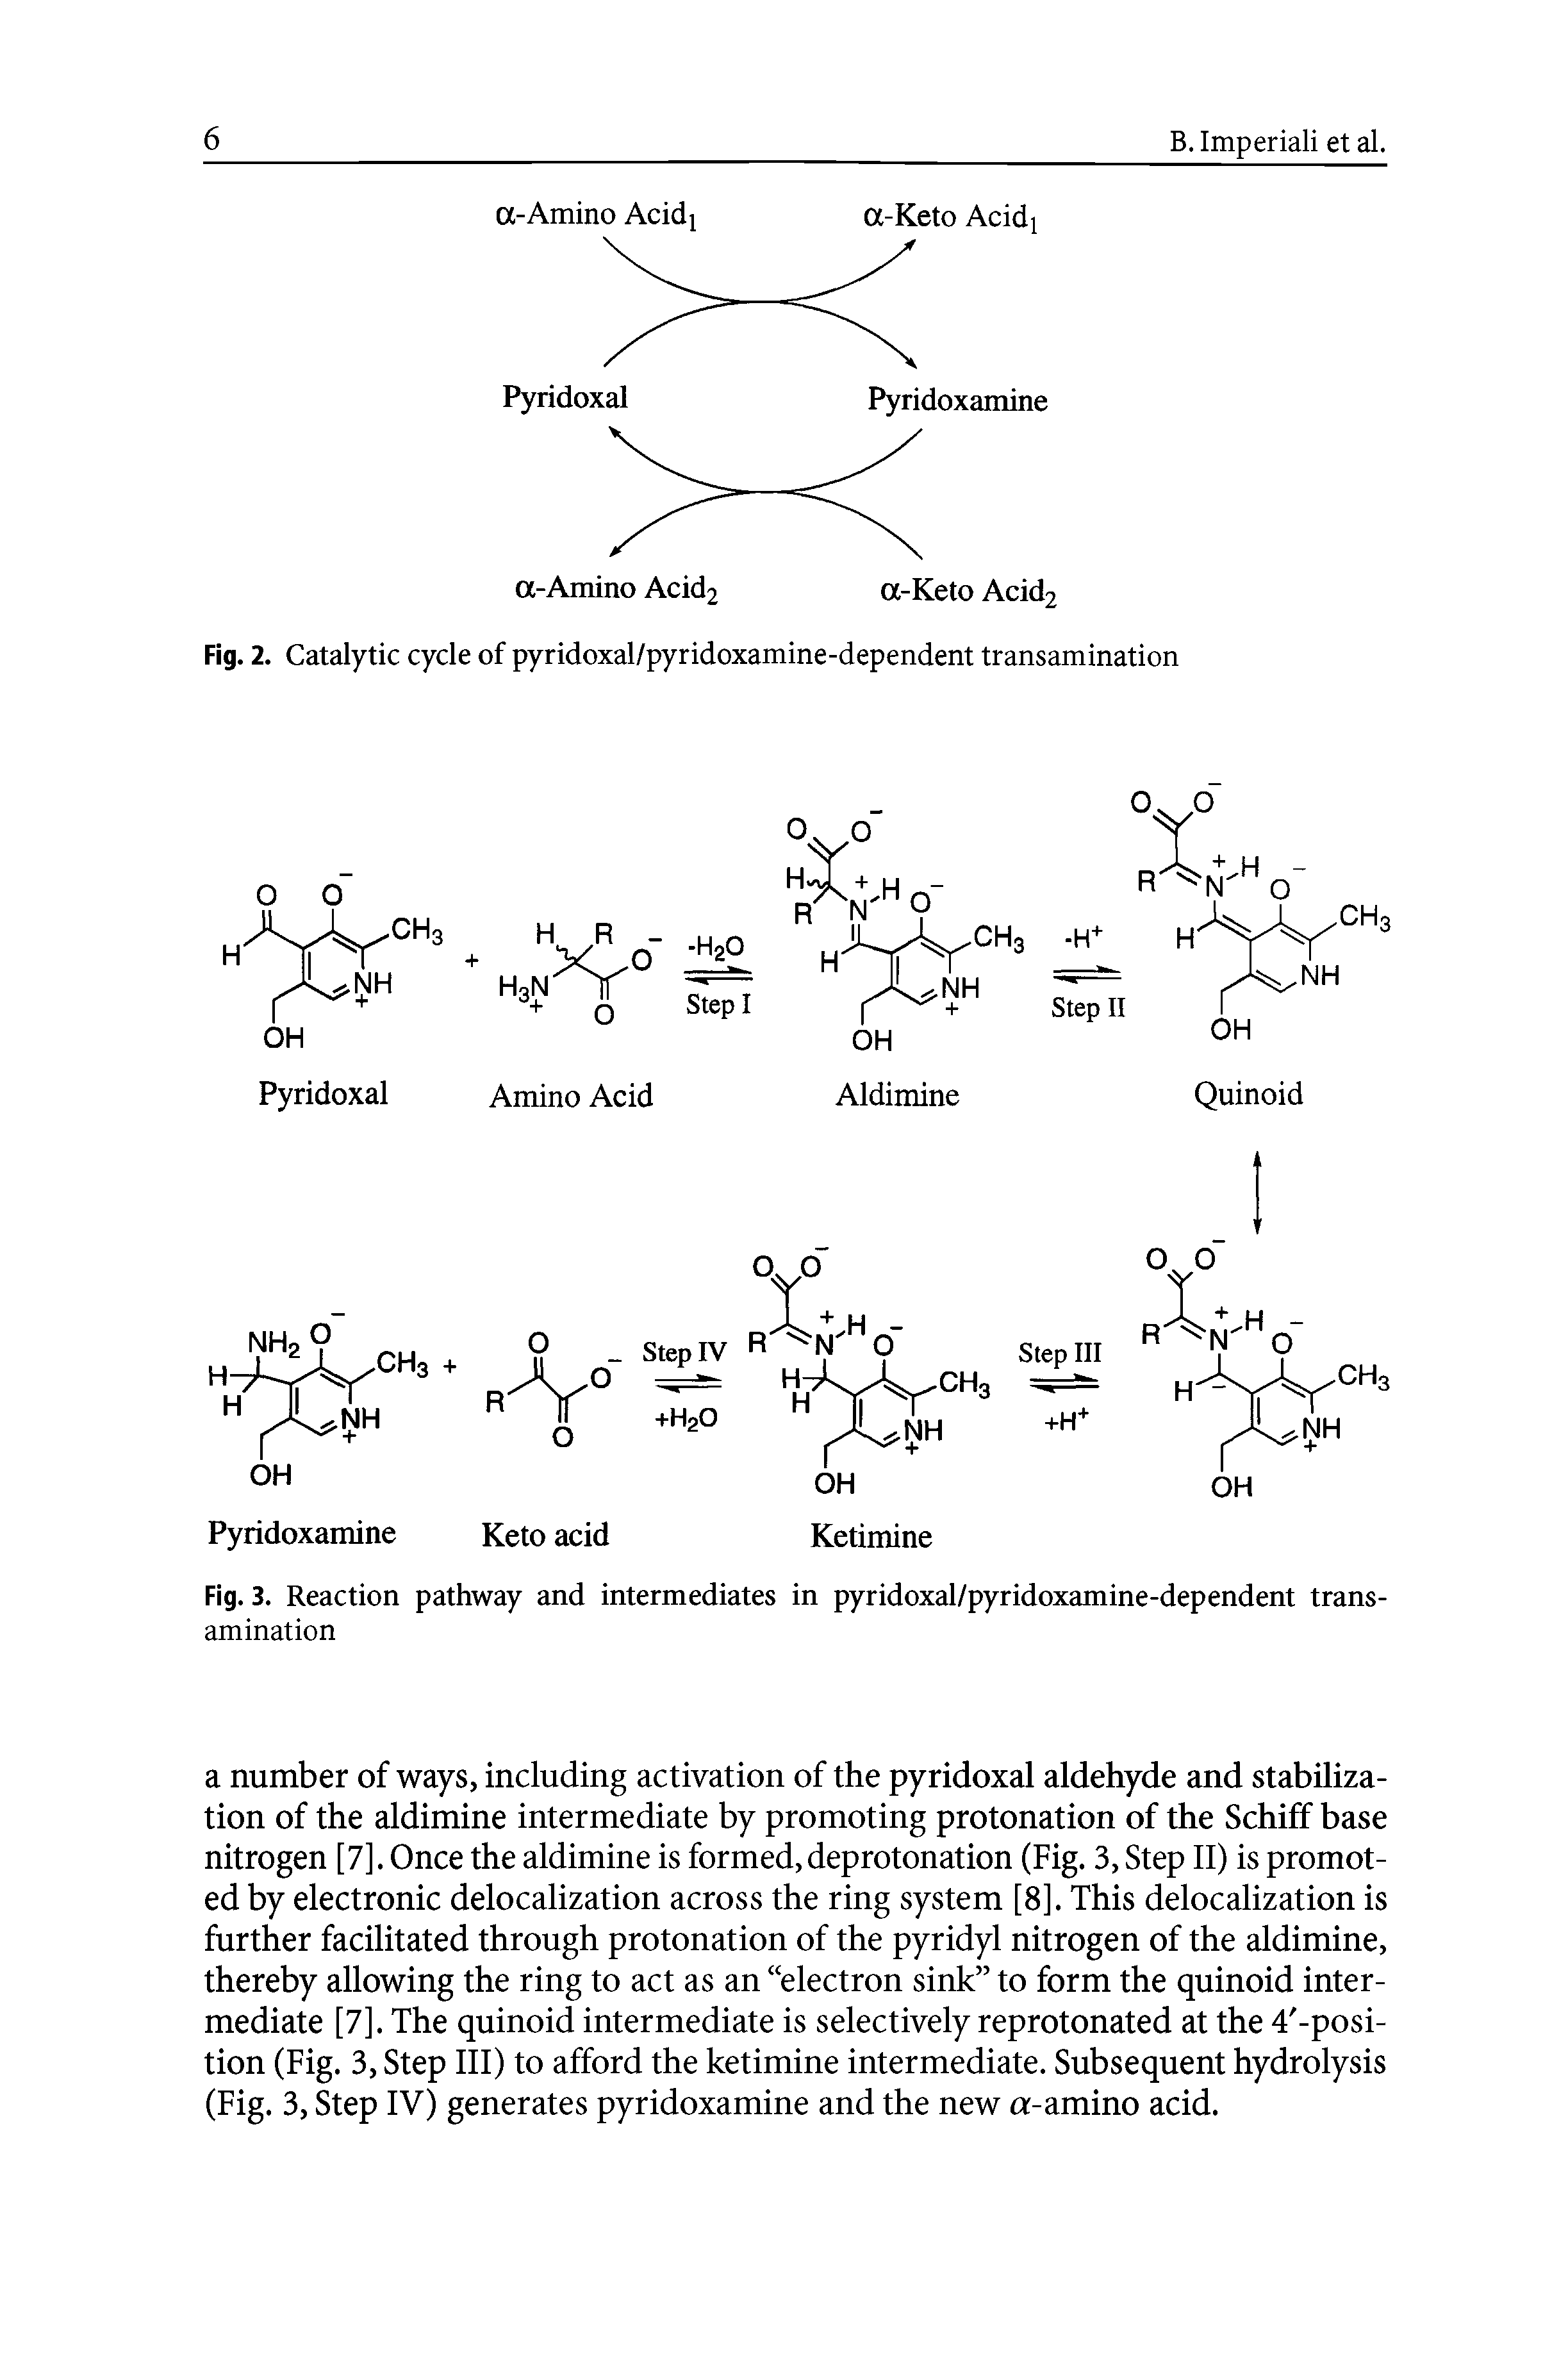 Fig. 2. Catalytic cycle of pyridoxal/pyridoxamine-dependent transamination...